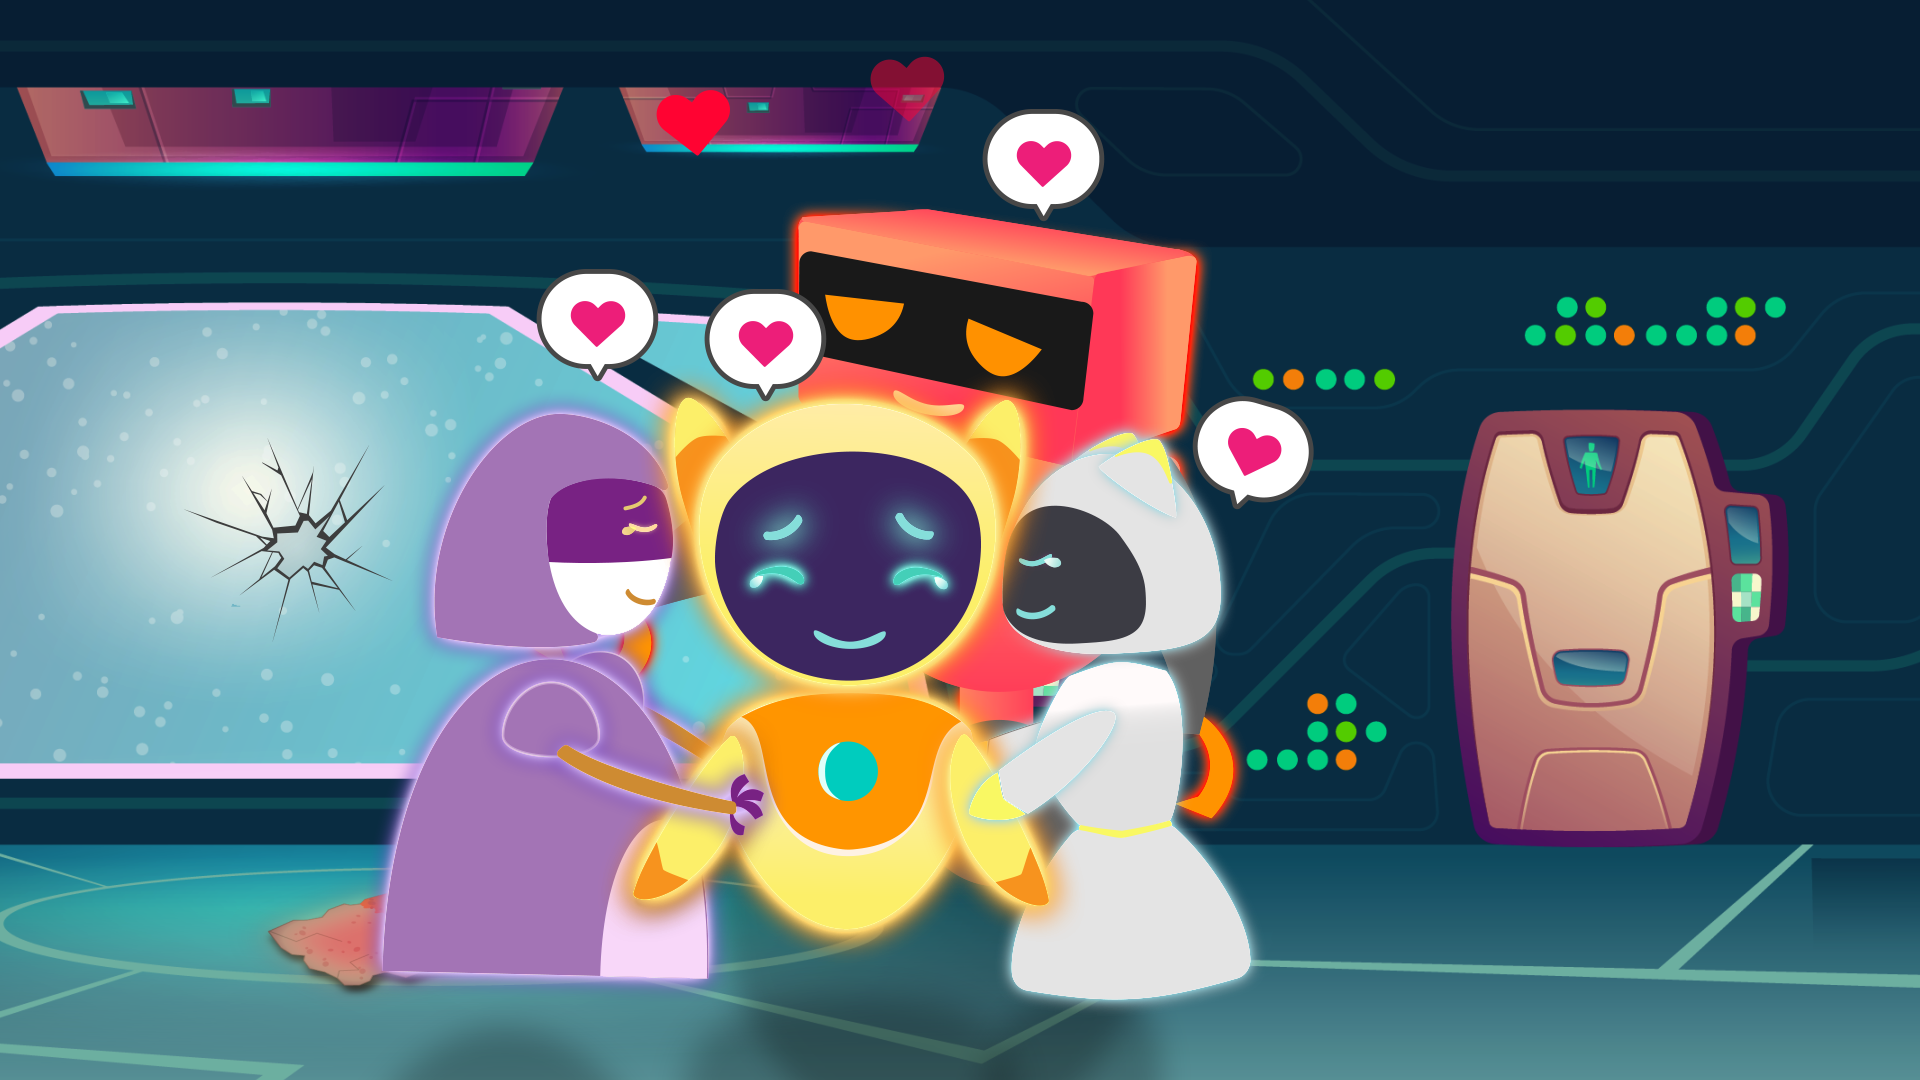 A family of robots having a group hug